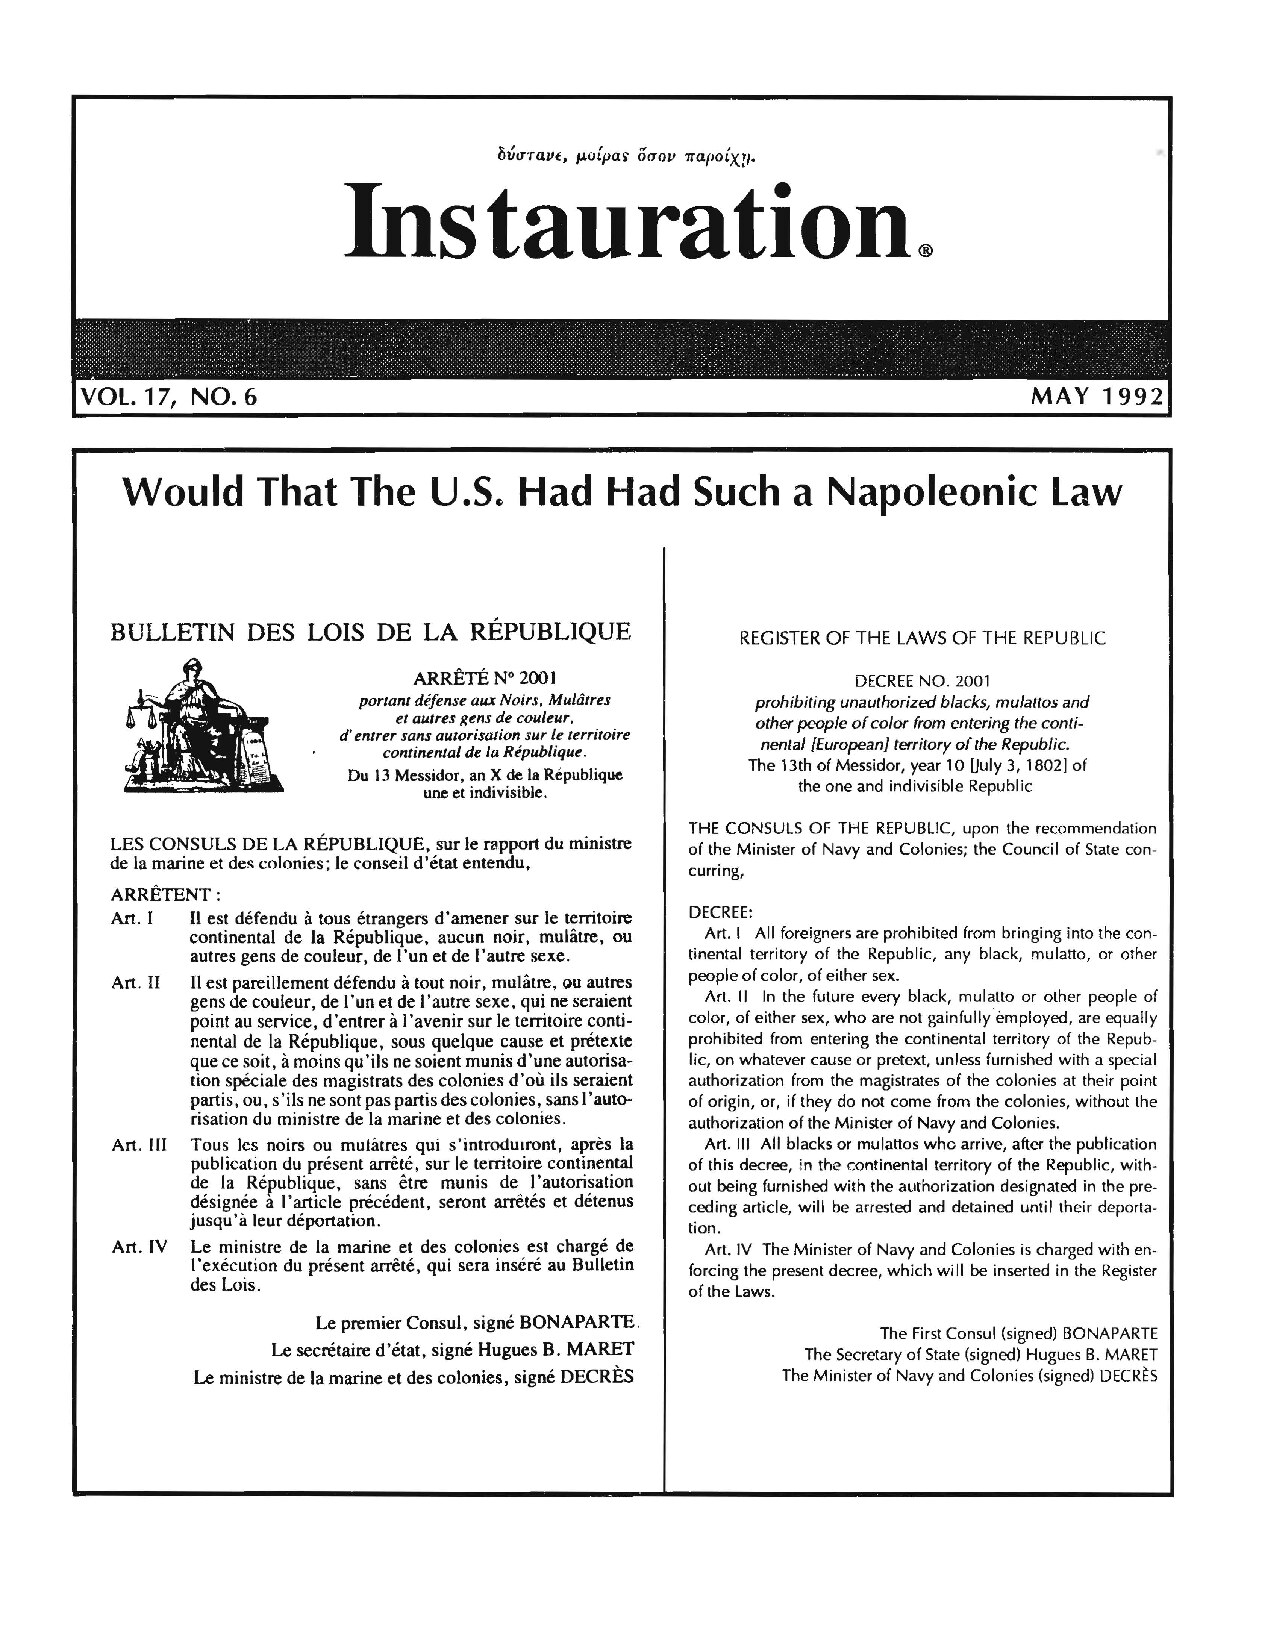 Instauration-1992-05-May-Vol17-No6